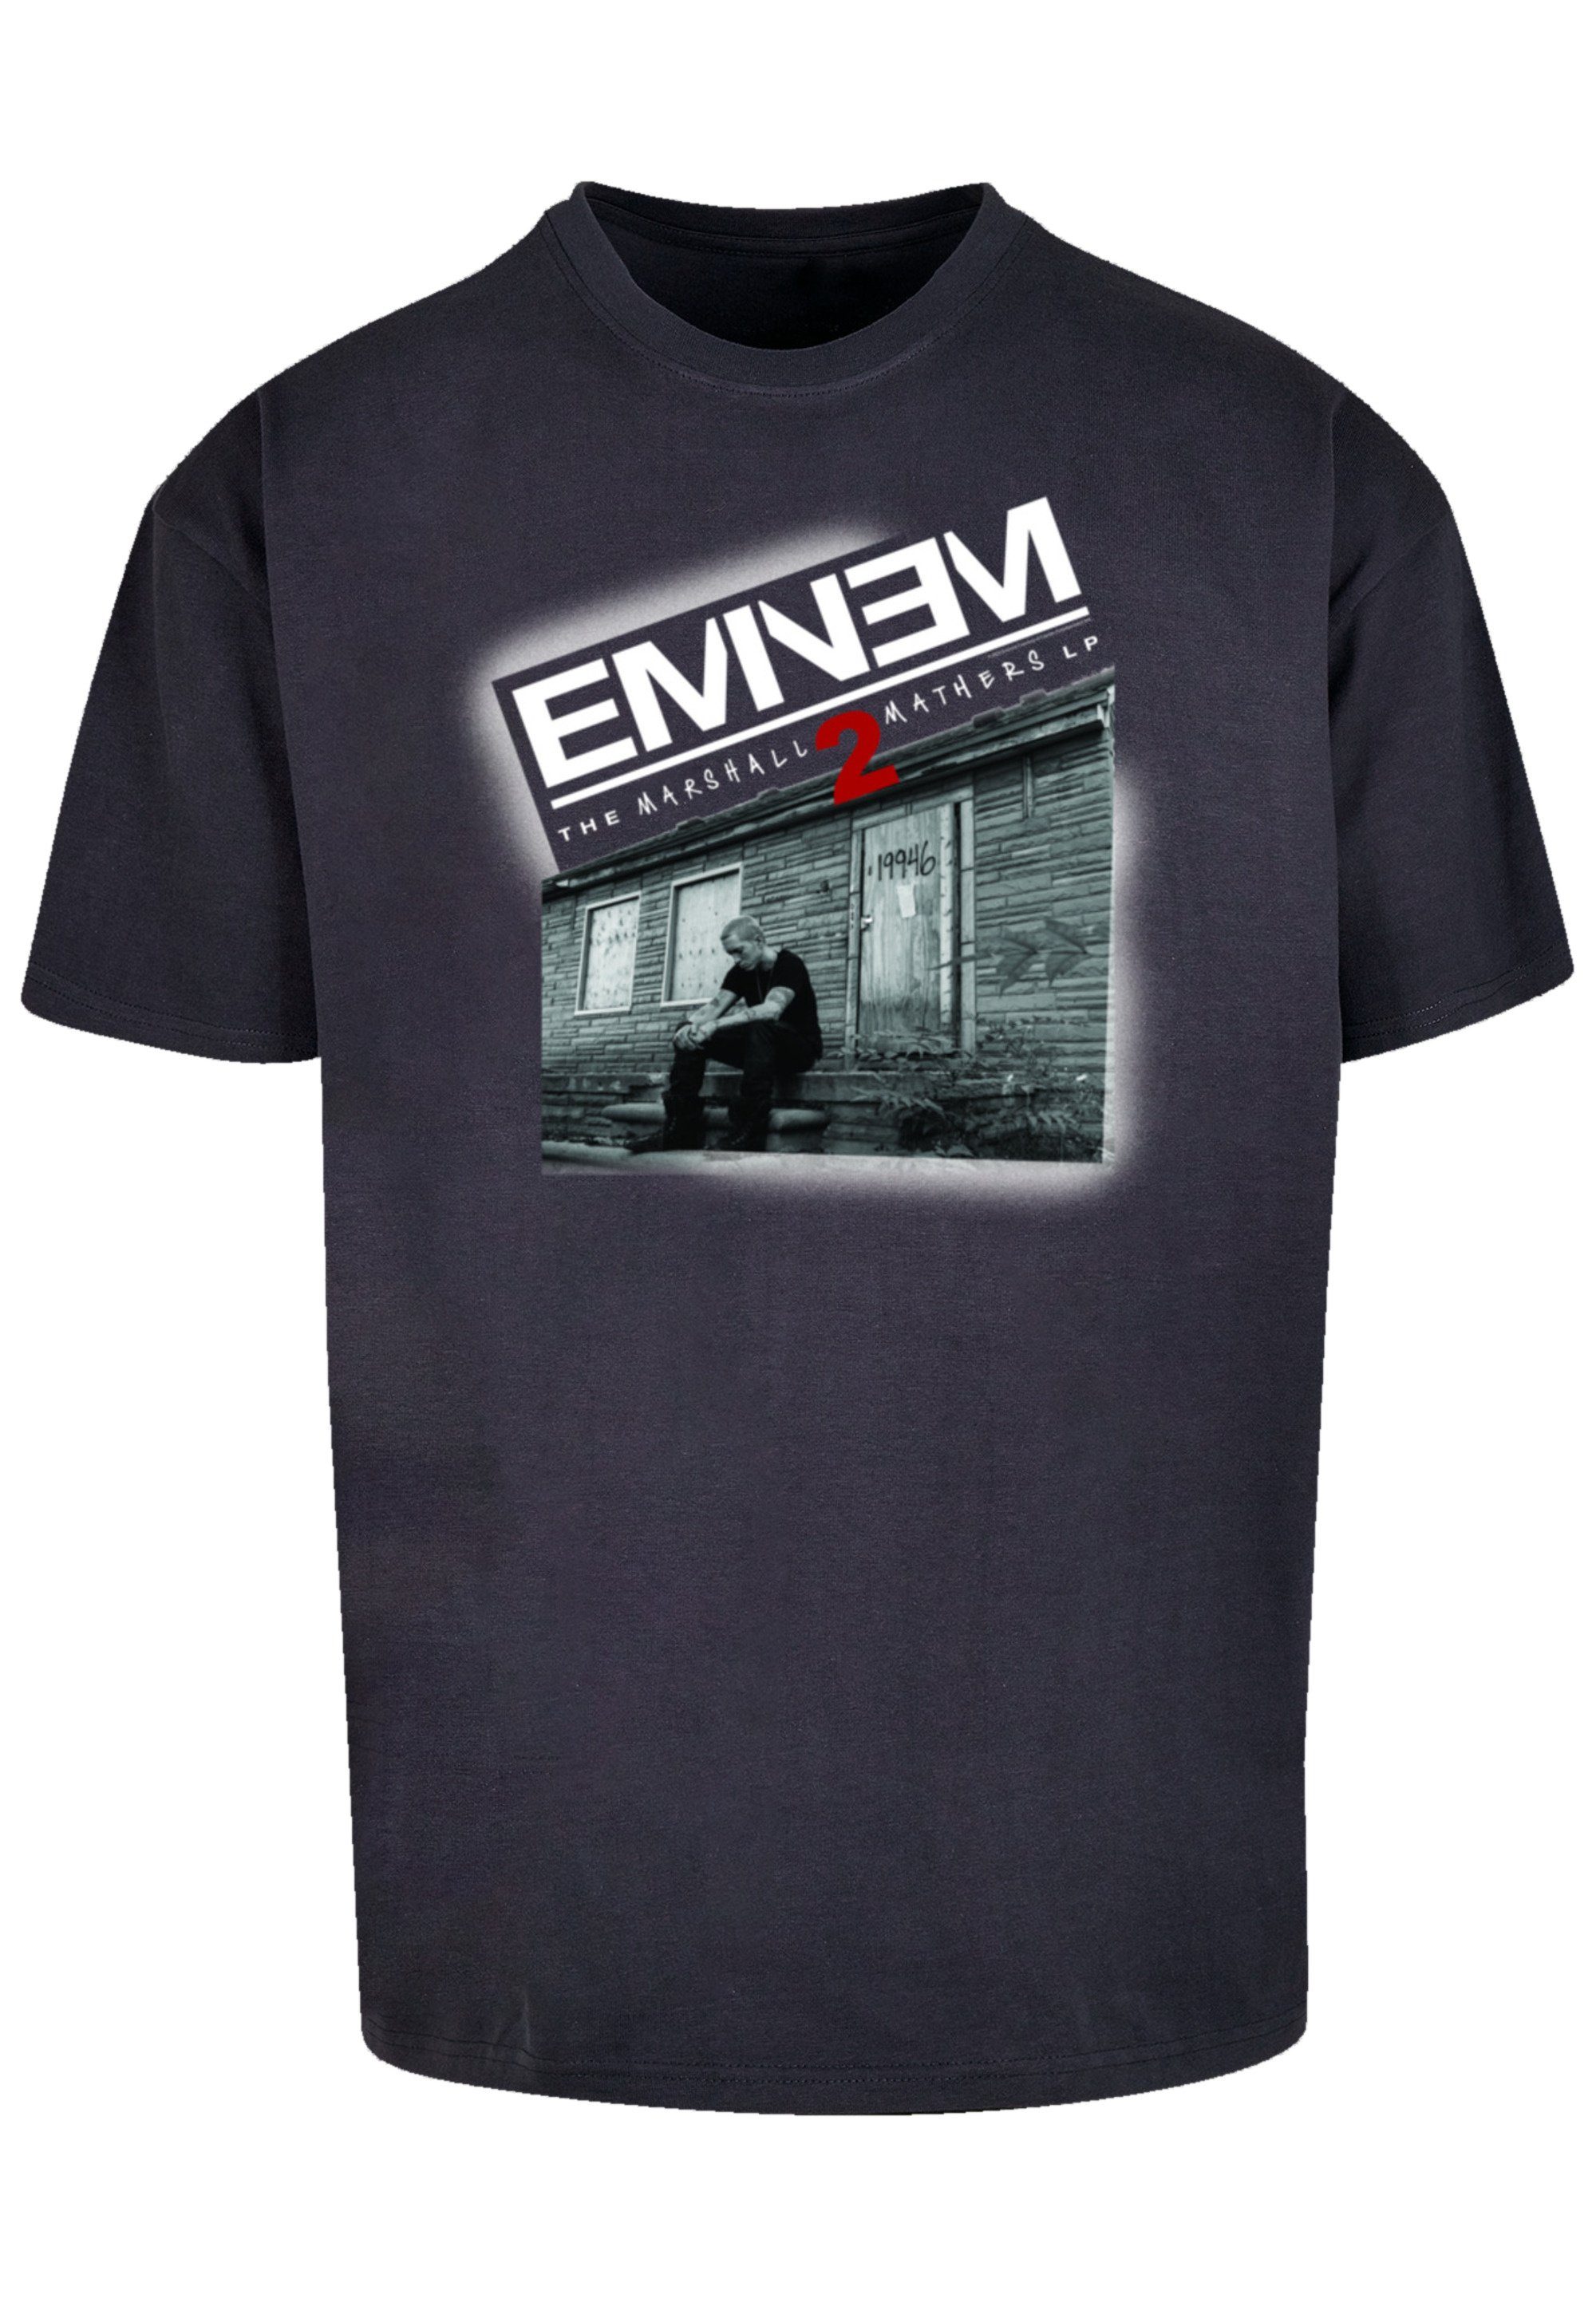 F4NT4STIC T-Shirt Oldschool Music Marshall navy 2 Premium Mathers Rap Musik Eminem Qualität